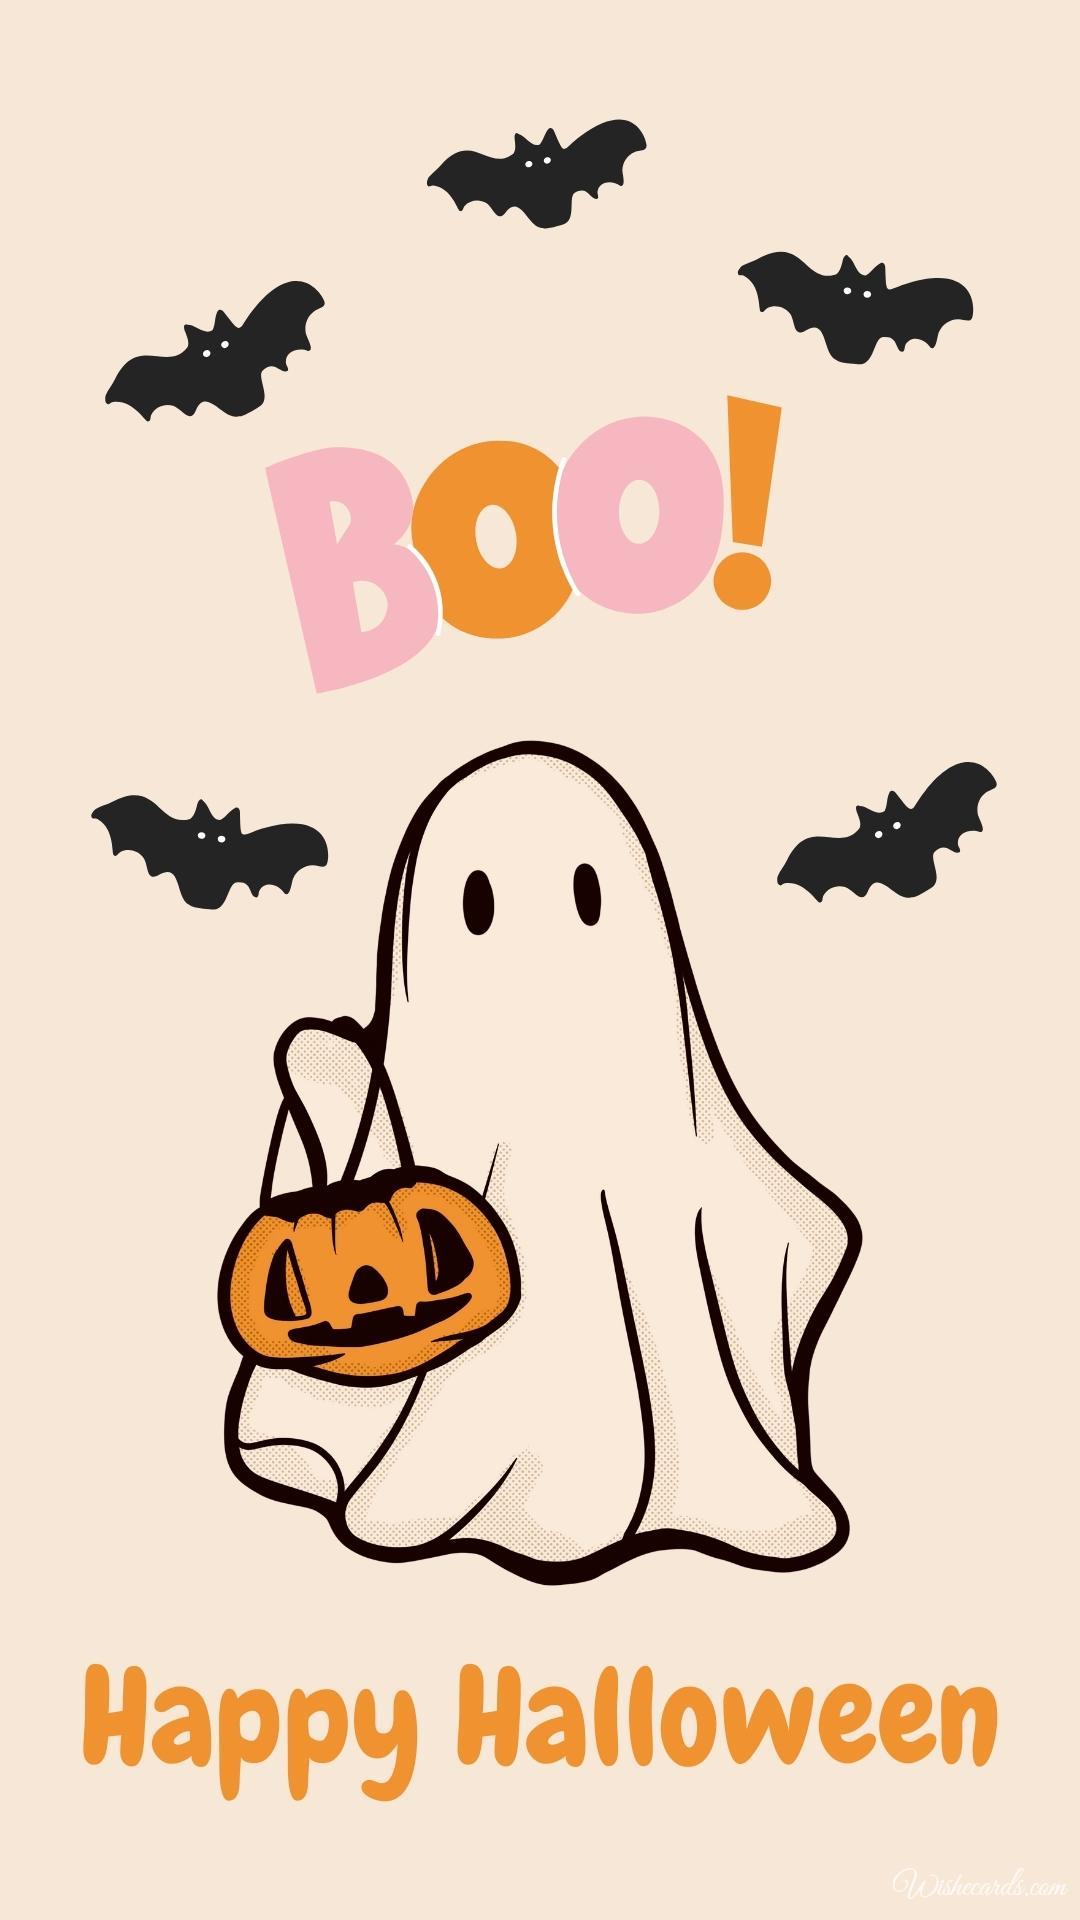 Boo Halloween Image